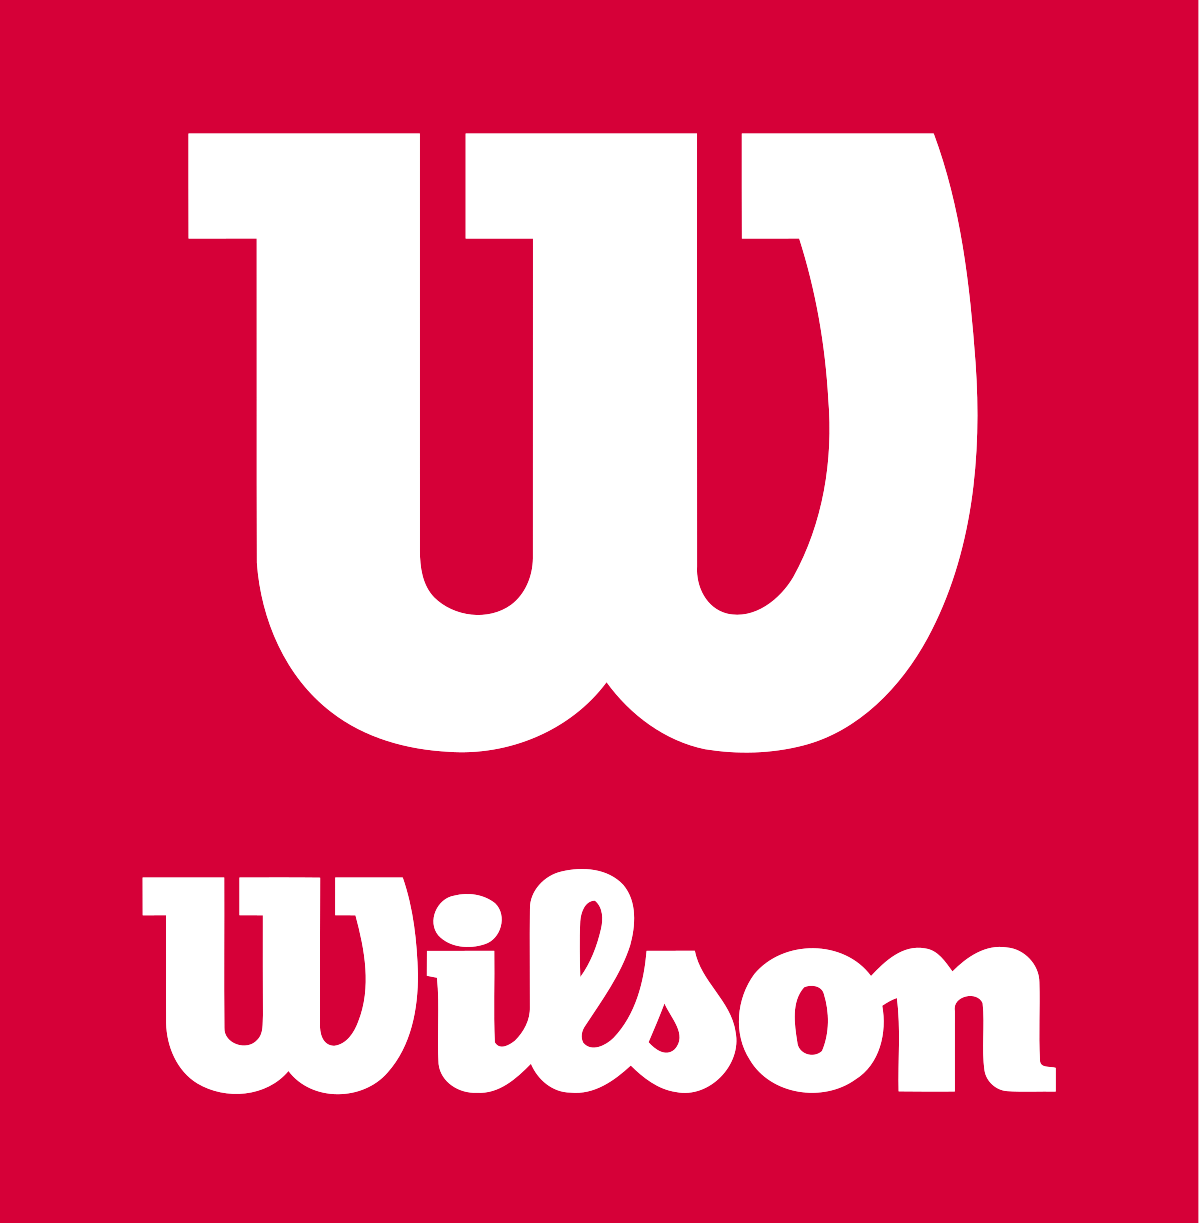 wilson sporting goods  u2014 wikip u00e9dia